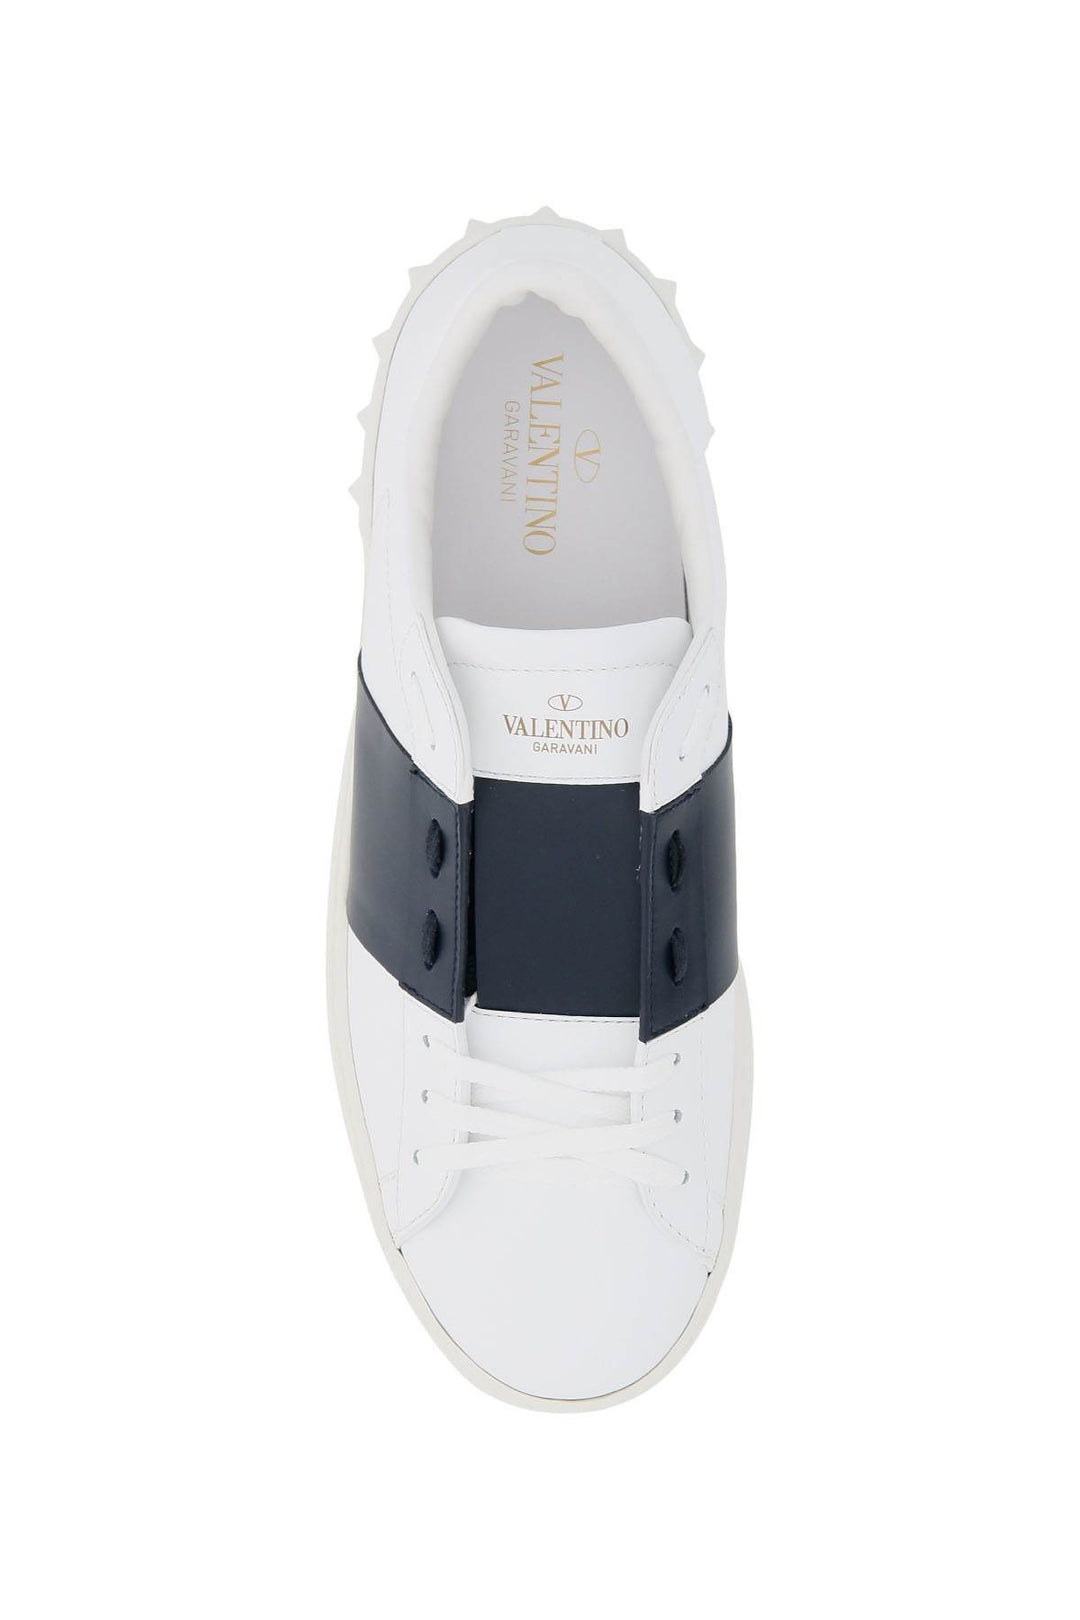 Valentino Garavani Open Sneakers   White